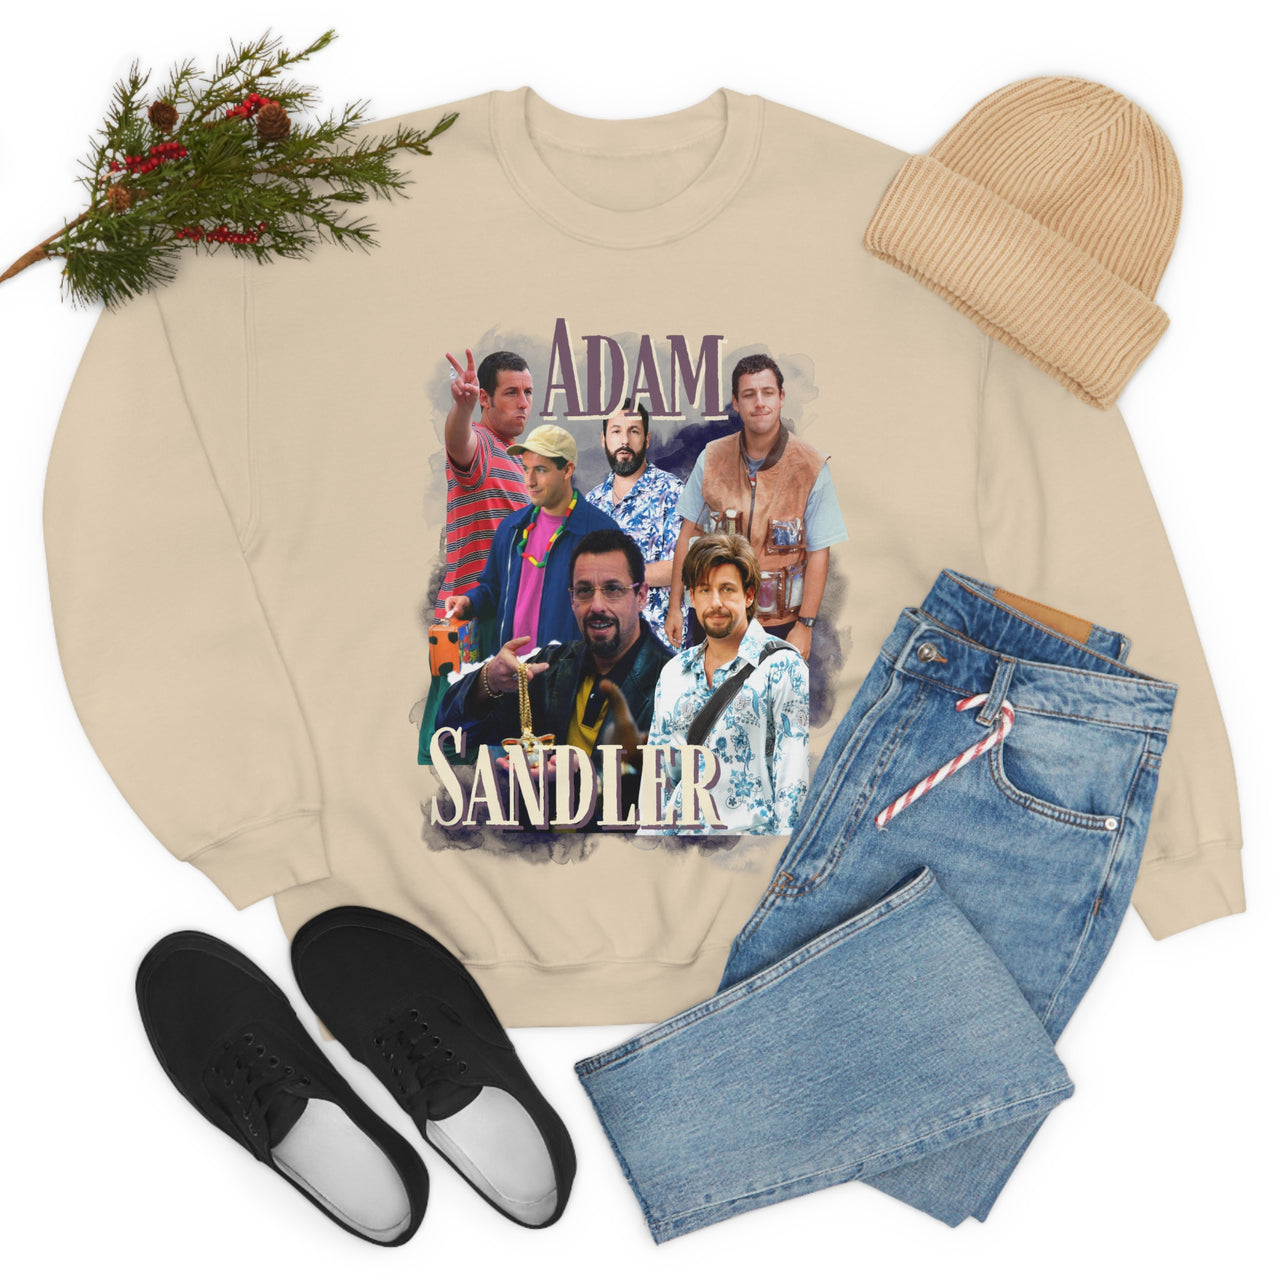 Adam Sandler Vintage Sweatshirt 90s Style Graphic